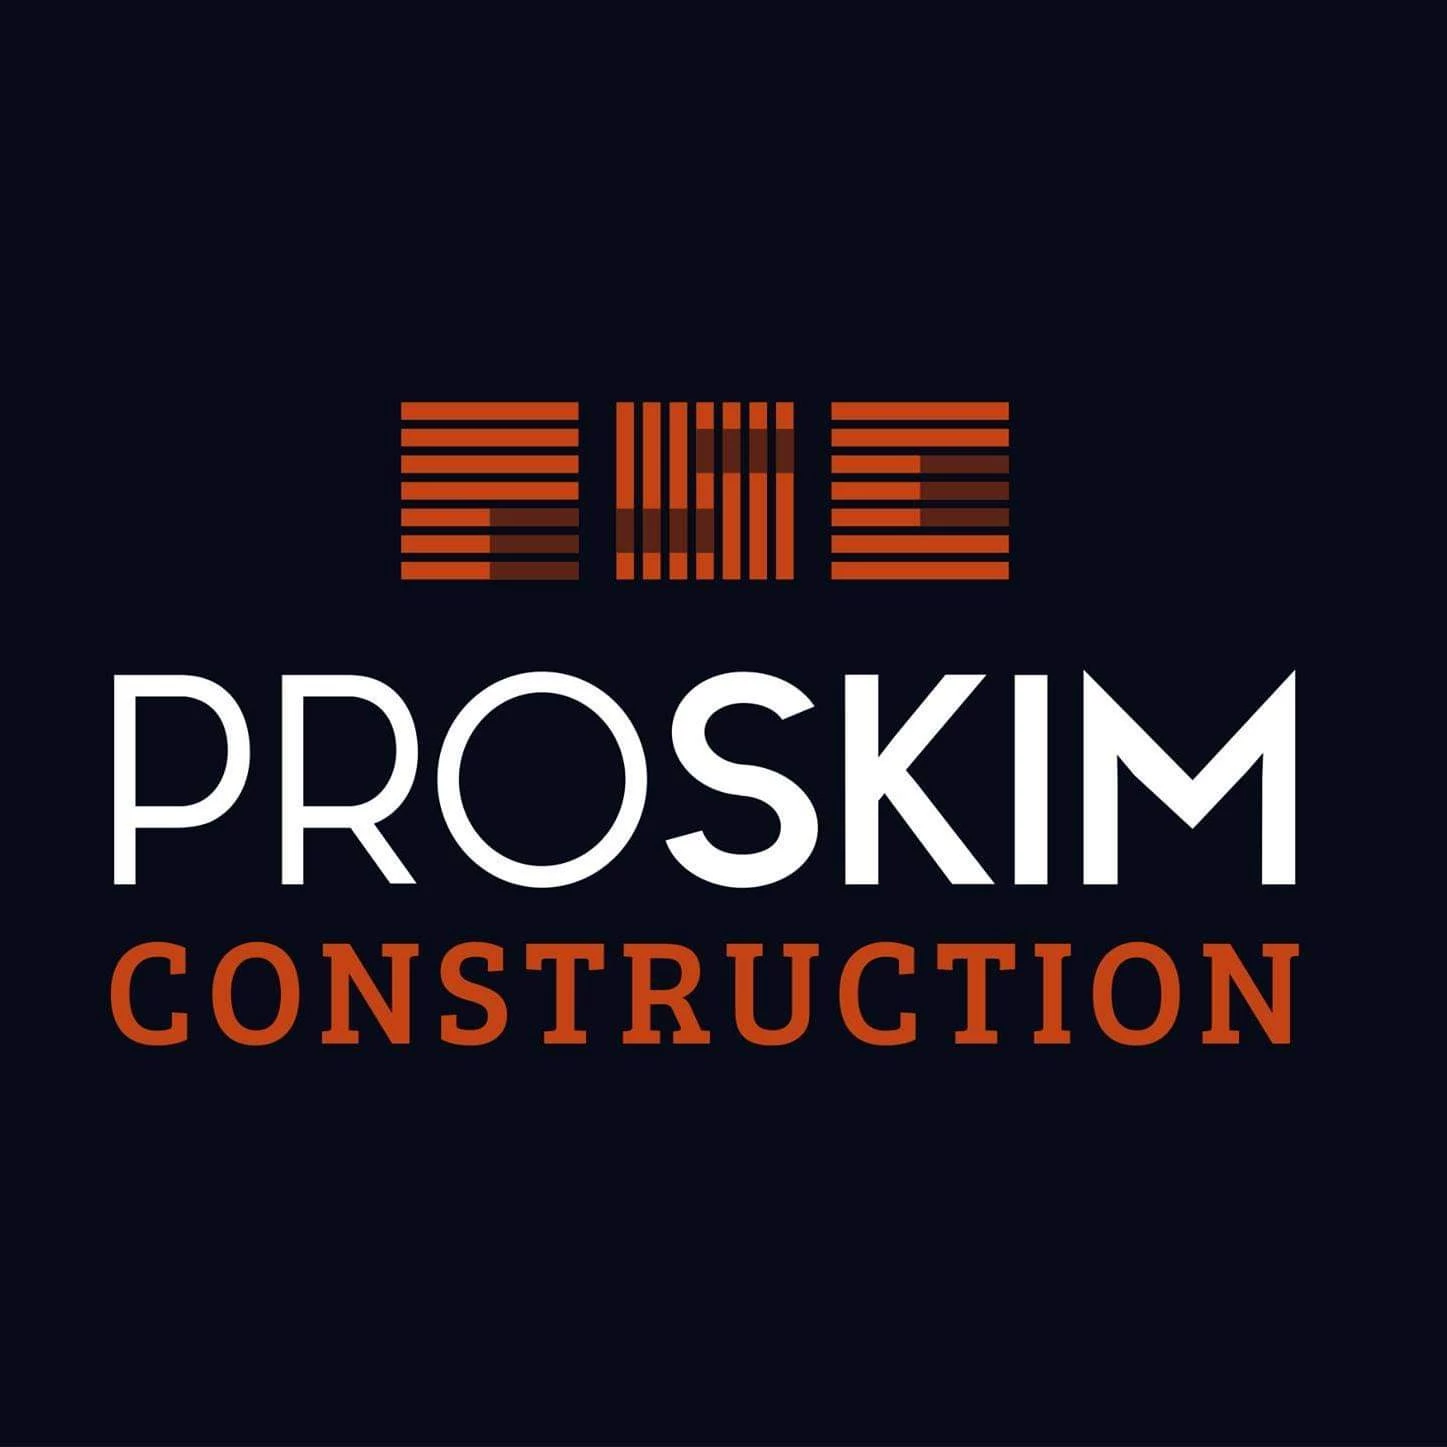 Proskim Construction